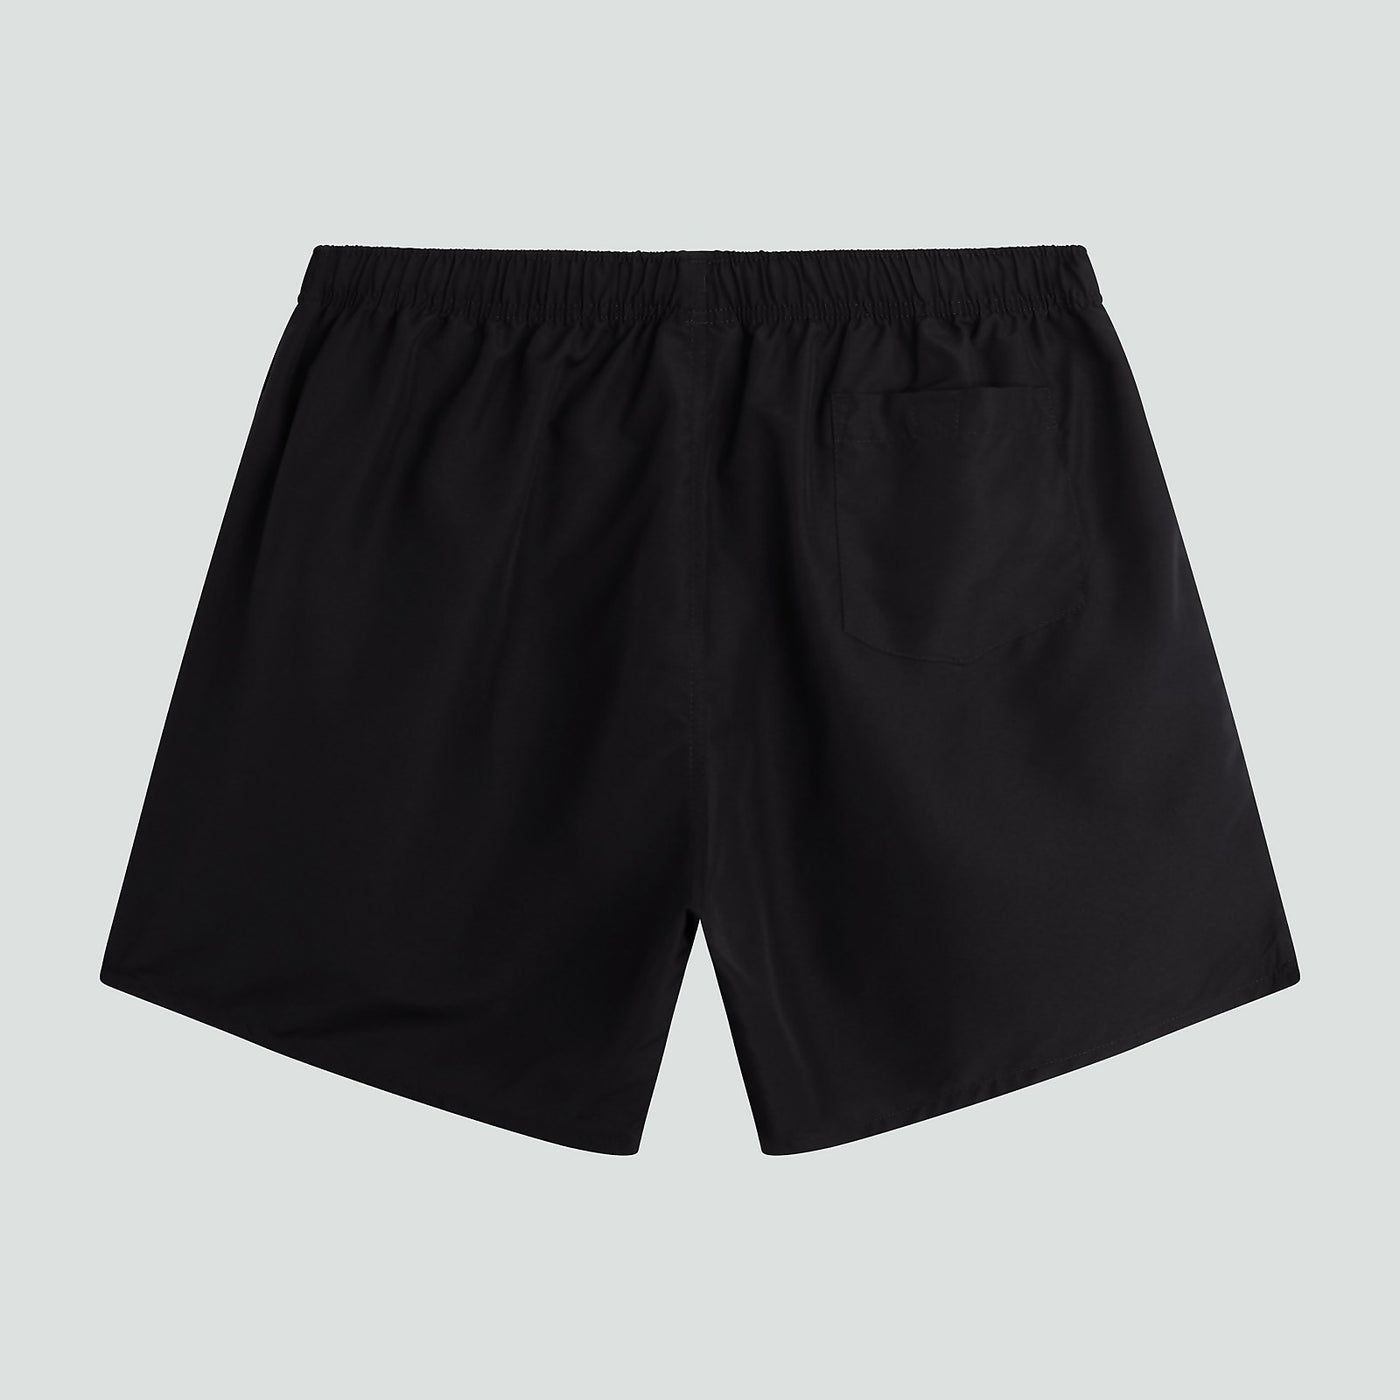 Canterbury Men's Tactic Shorts Black (with pockets)